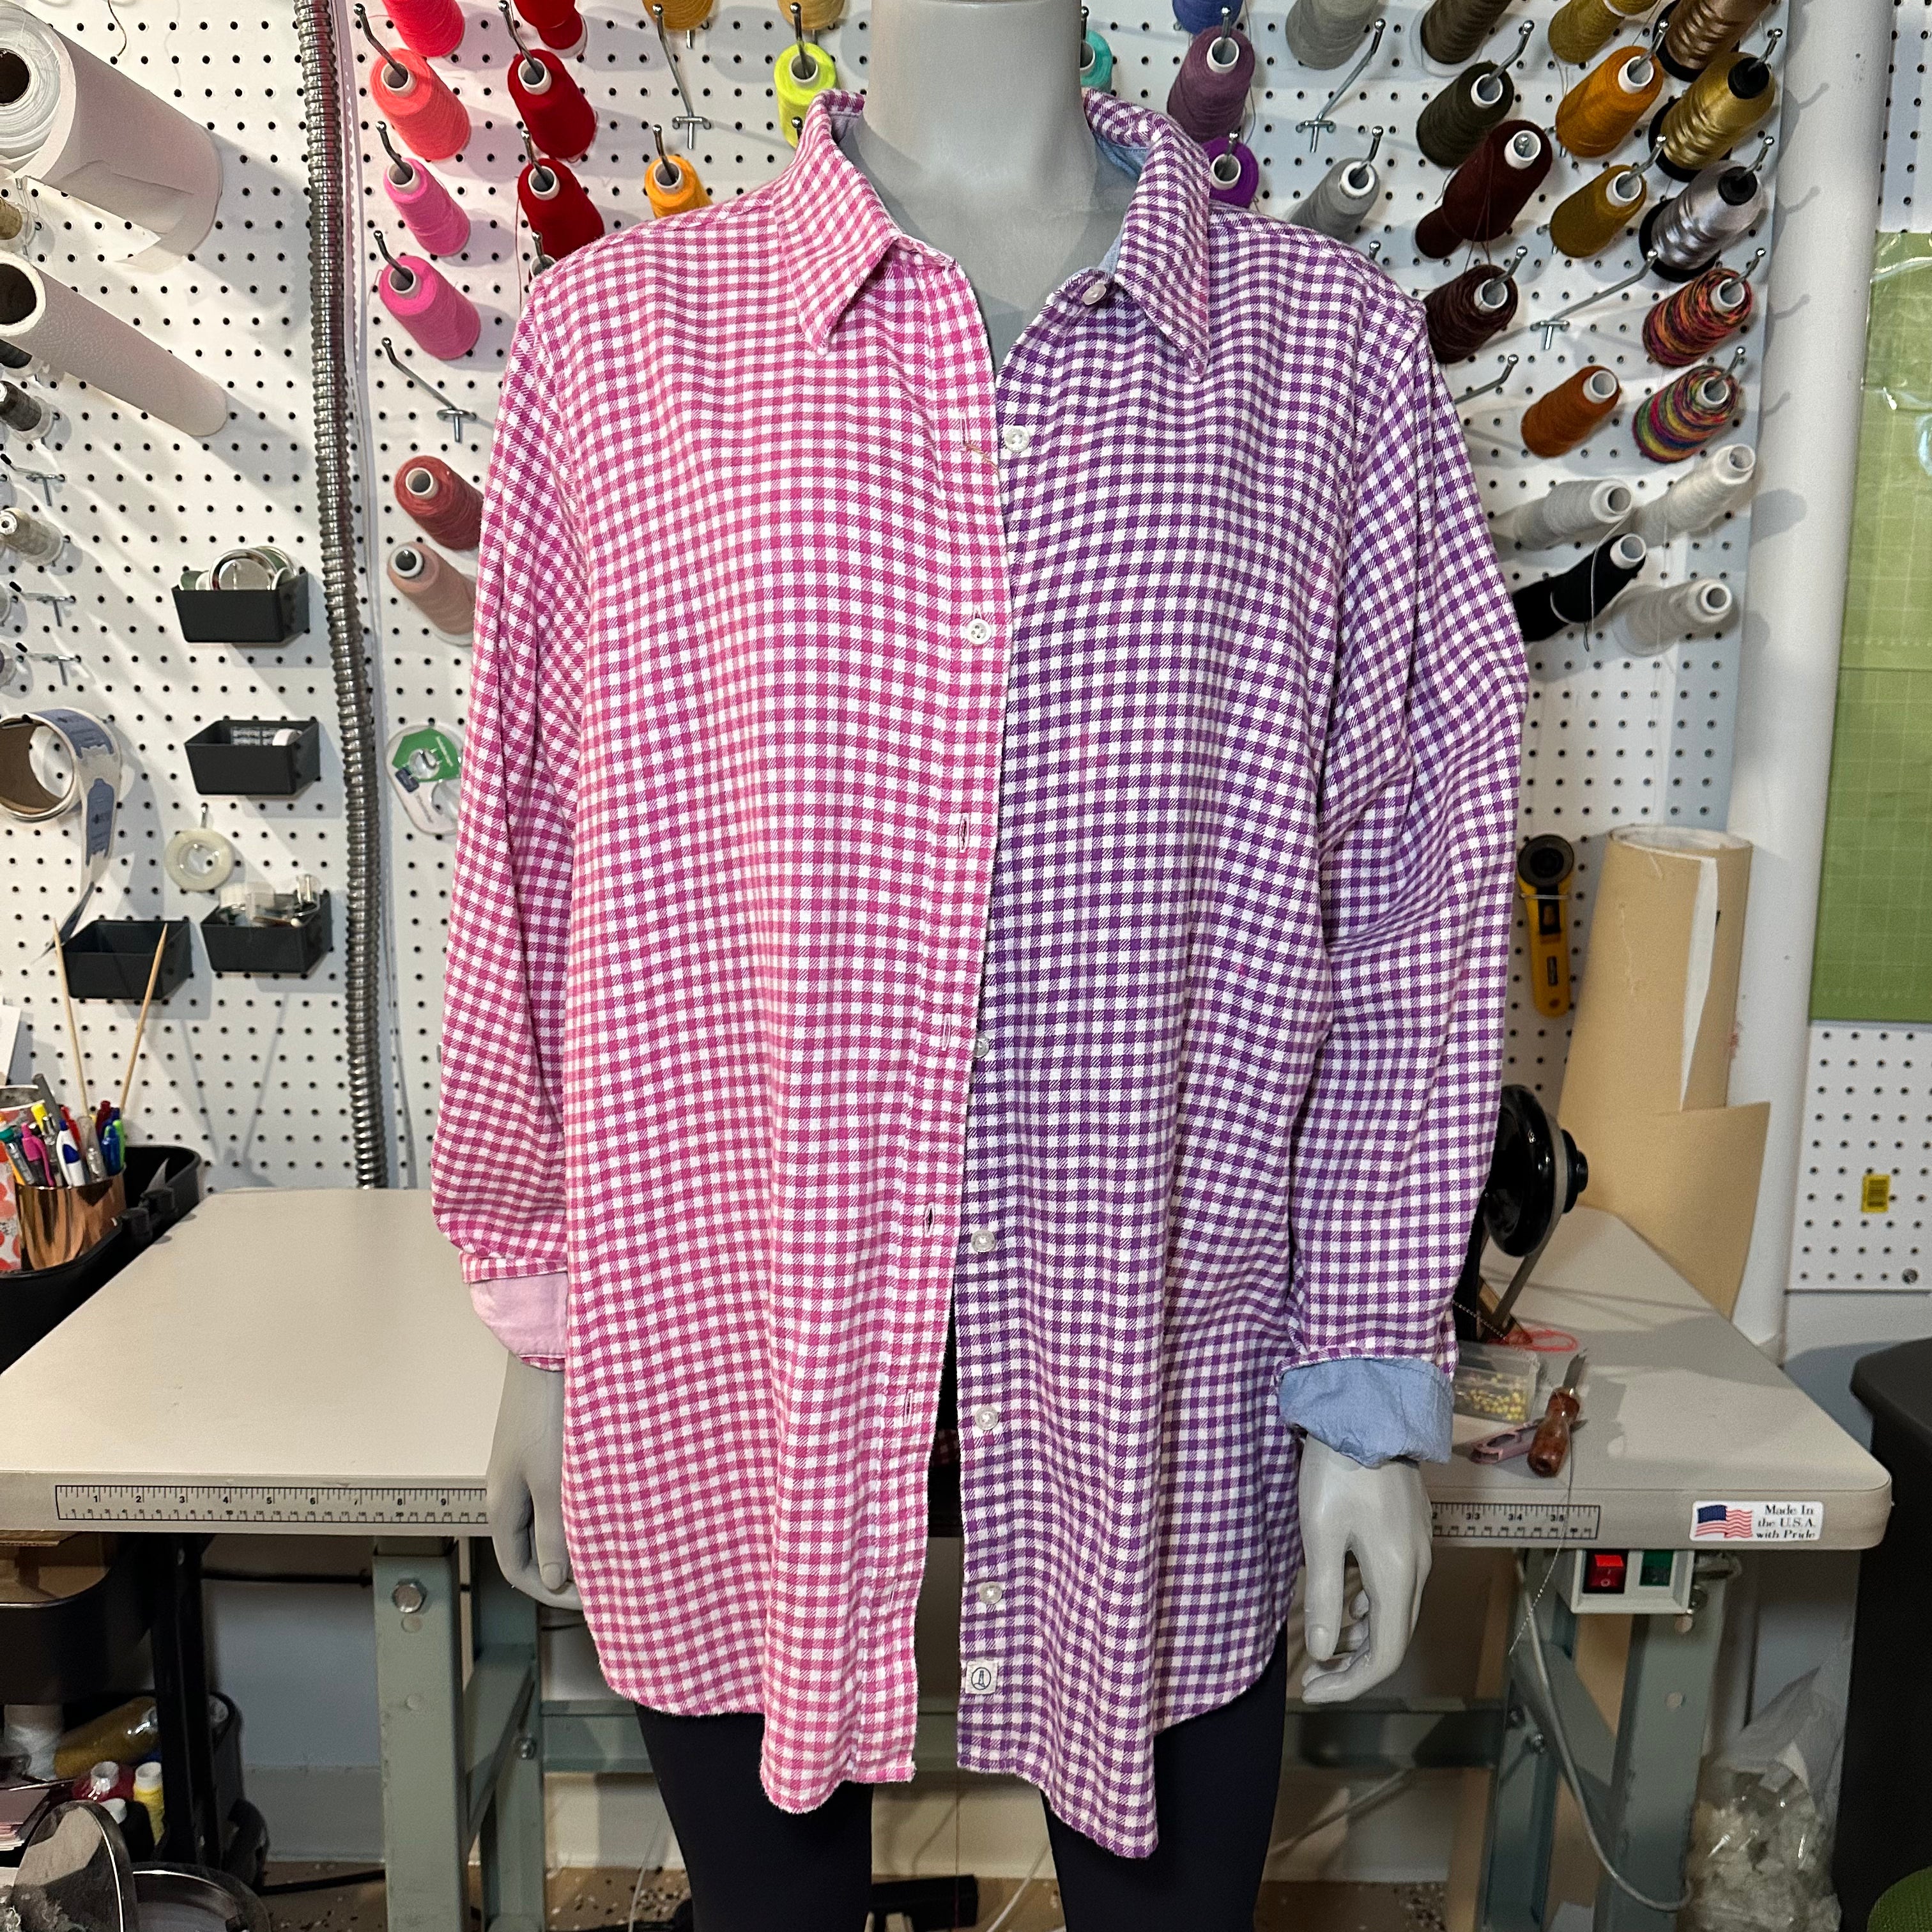 L/XL - Purple Split Dye Flannel